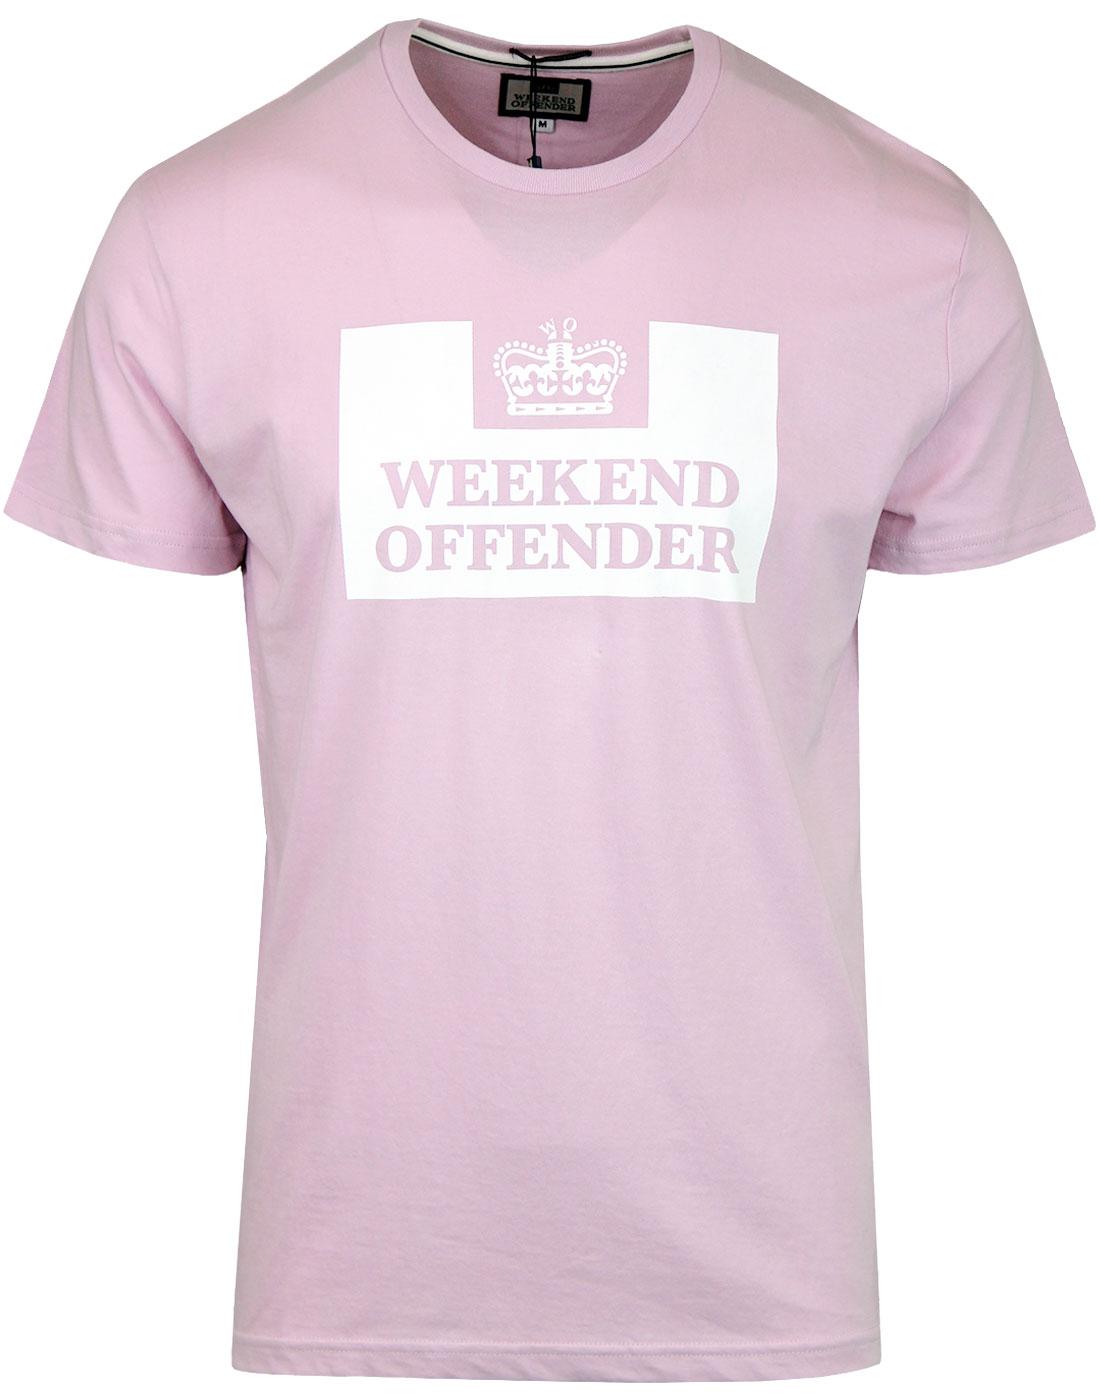 WEEKEND OFFENDER Retro Casuals Prison T-shirt (P)